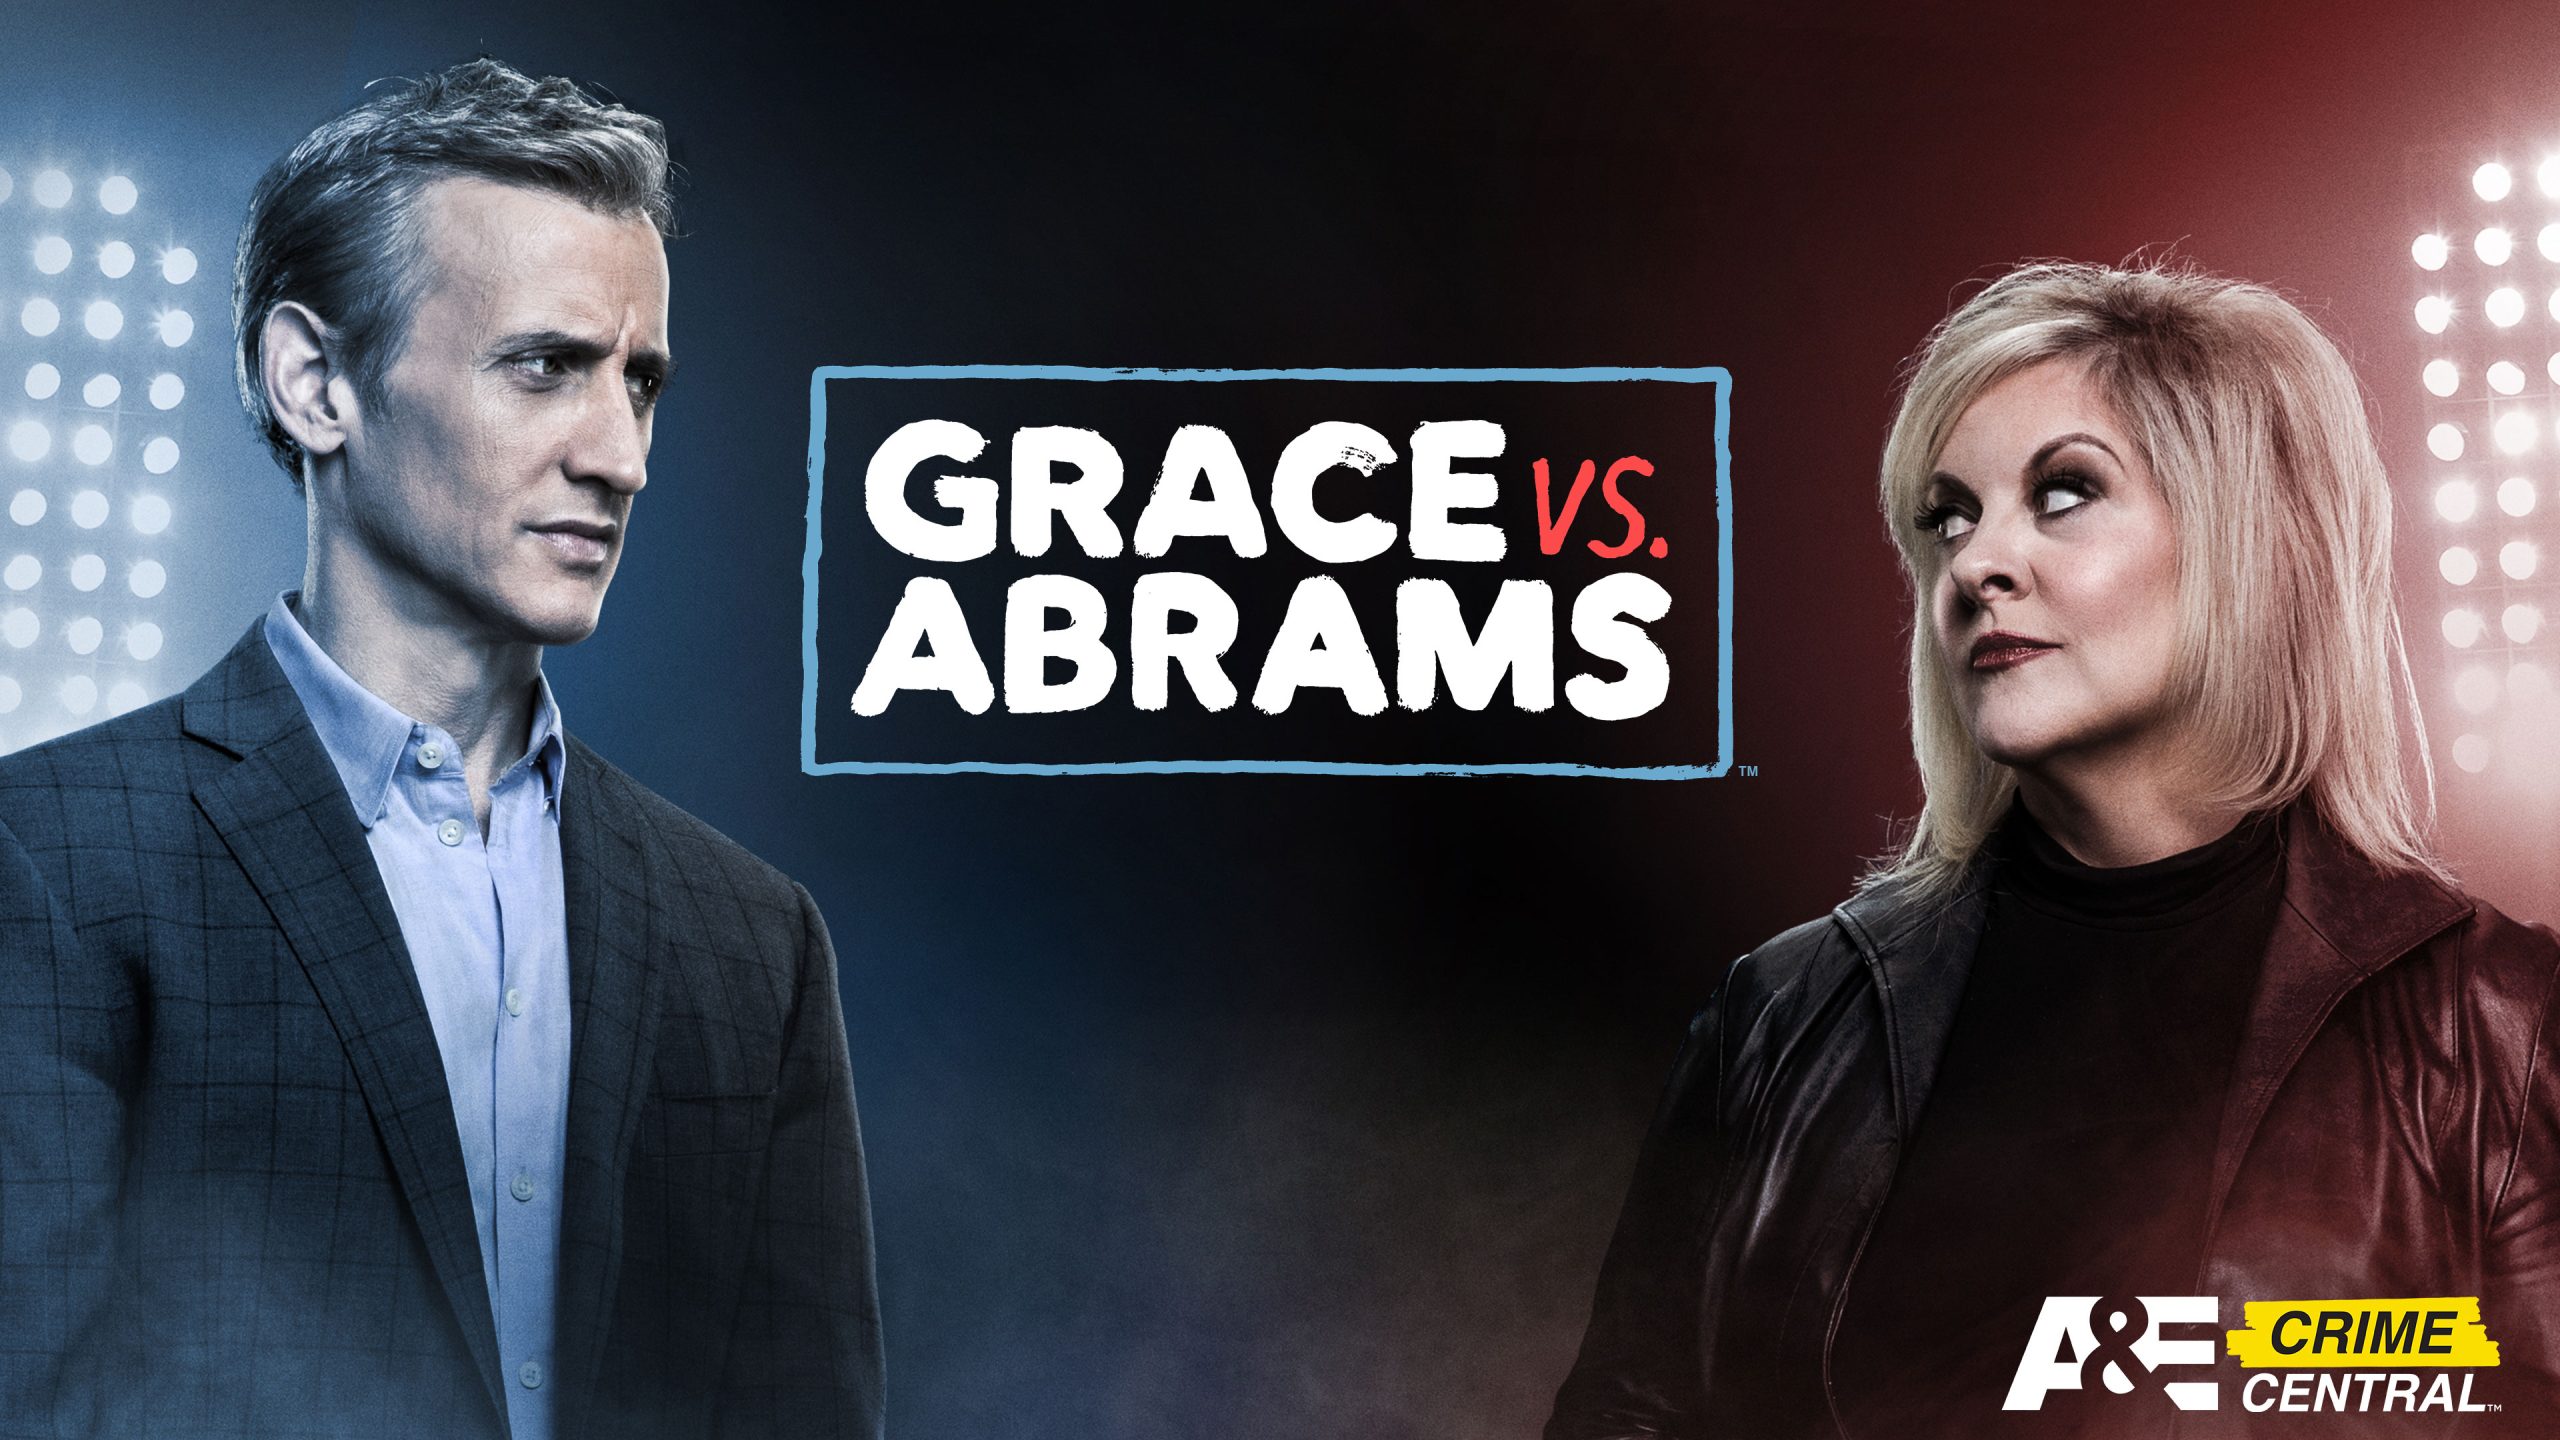 Watch Grace vs. Abrams on A&E Crime Central